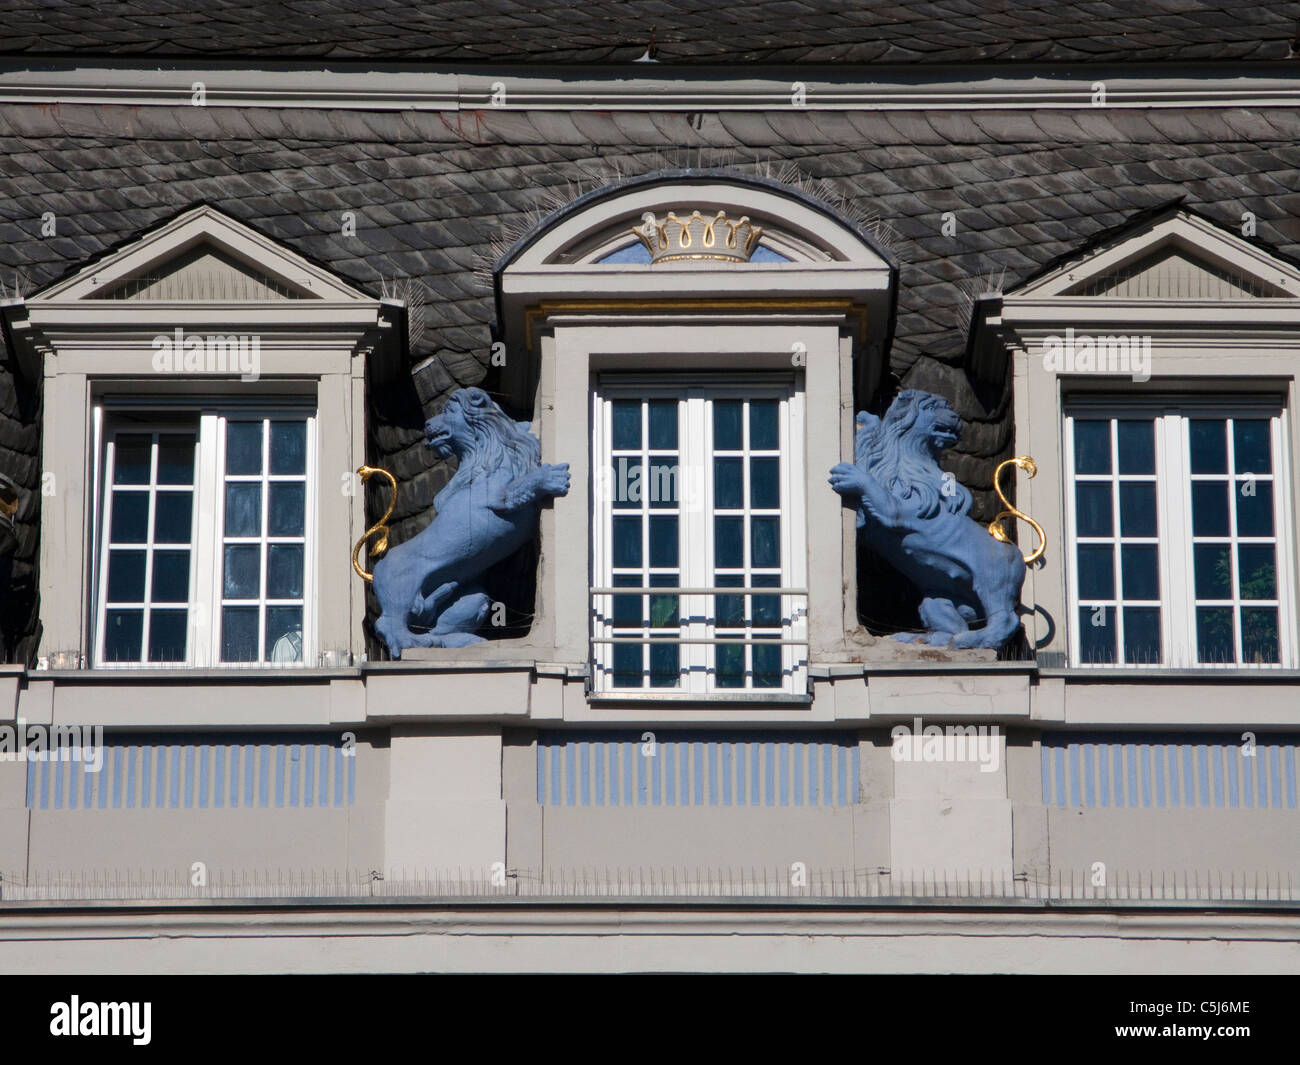 Blaue Loewen zieren ein Mansardenfenster, Haus am Hauptmarkt, dos leones azules, esculturas, decora una ventana, principal mercado Foto de stock